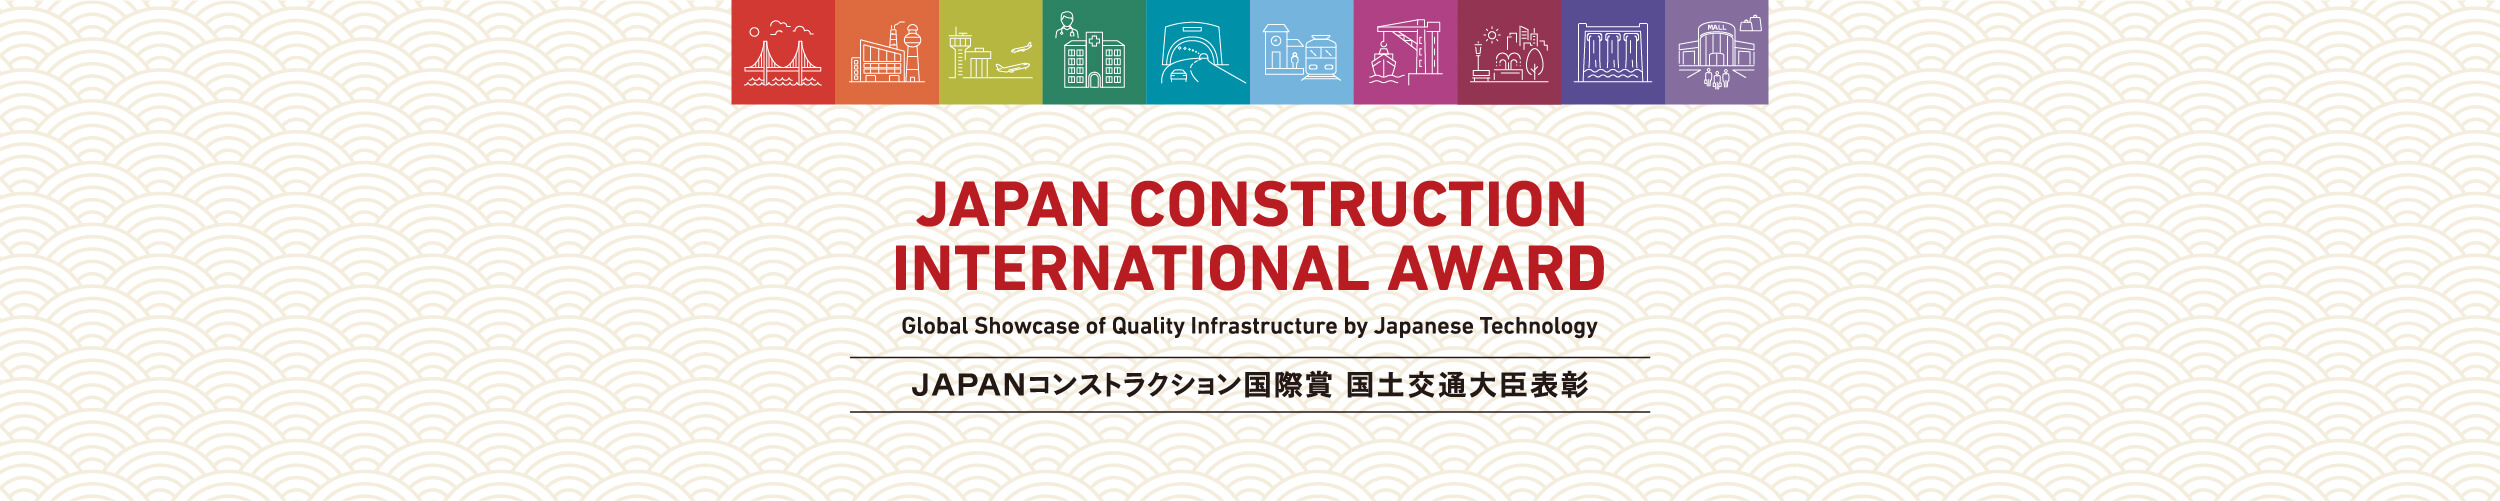 JAPAN CONSTRUCTION INTERNATIONAL AWARD JAPANコンストラクション国際賞 国土交通大臣表彰